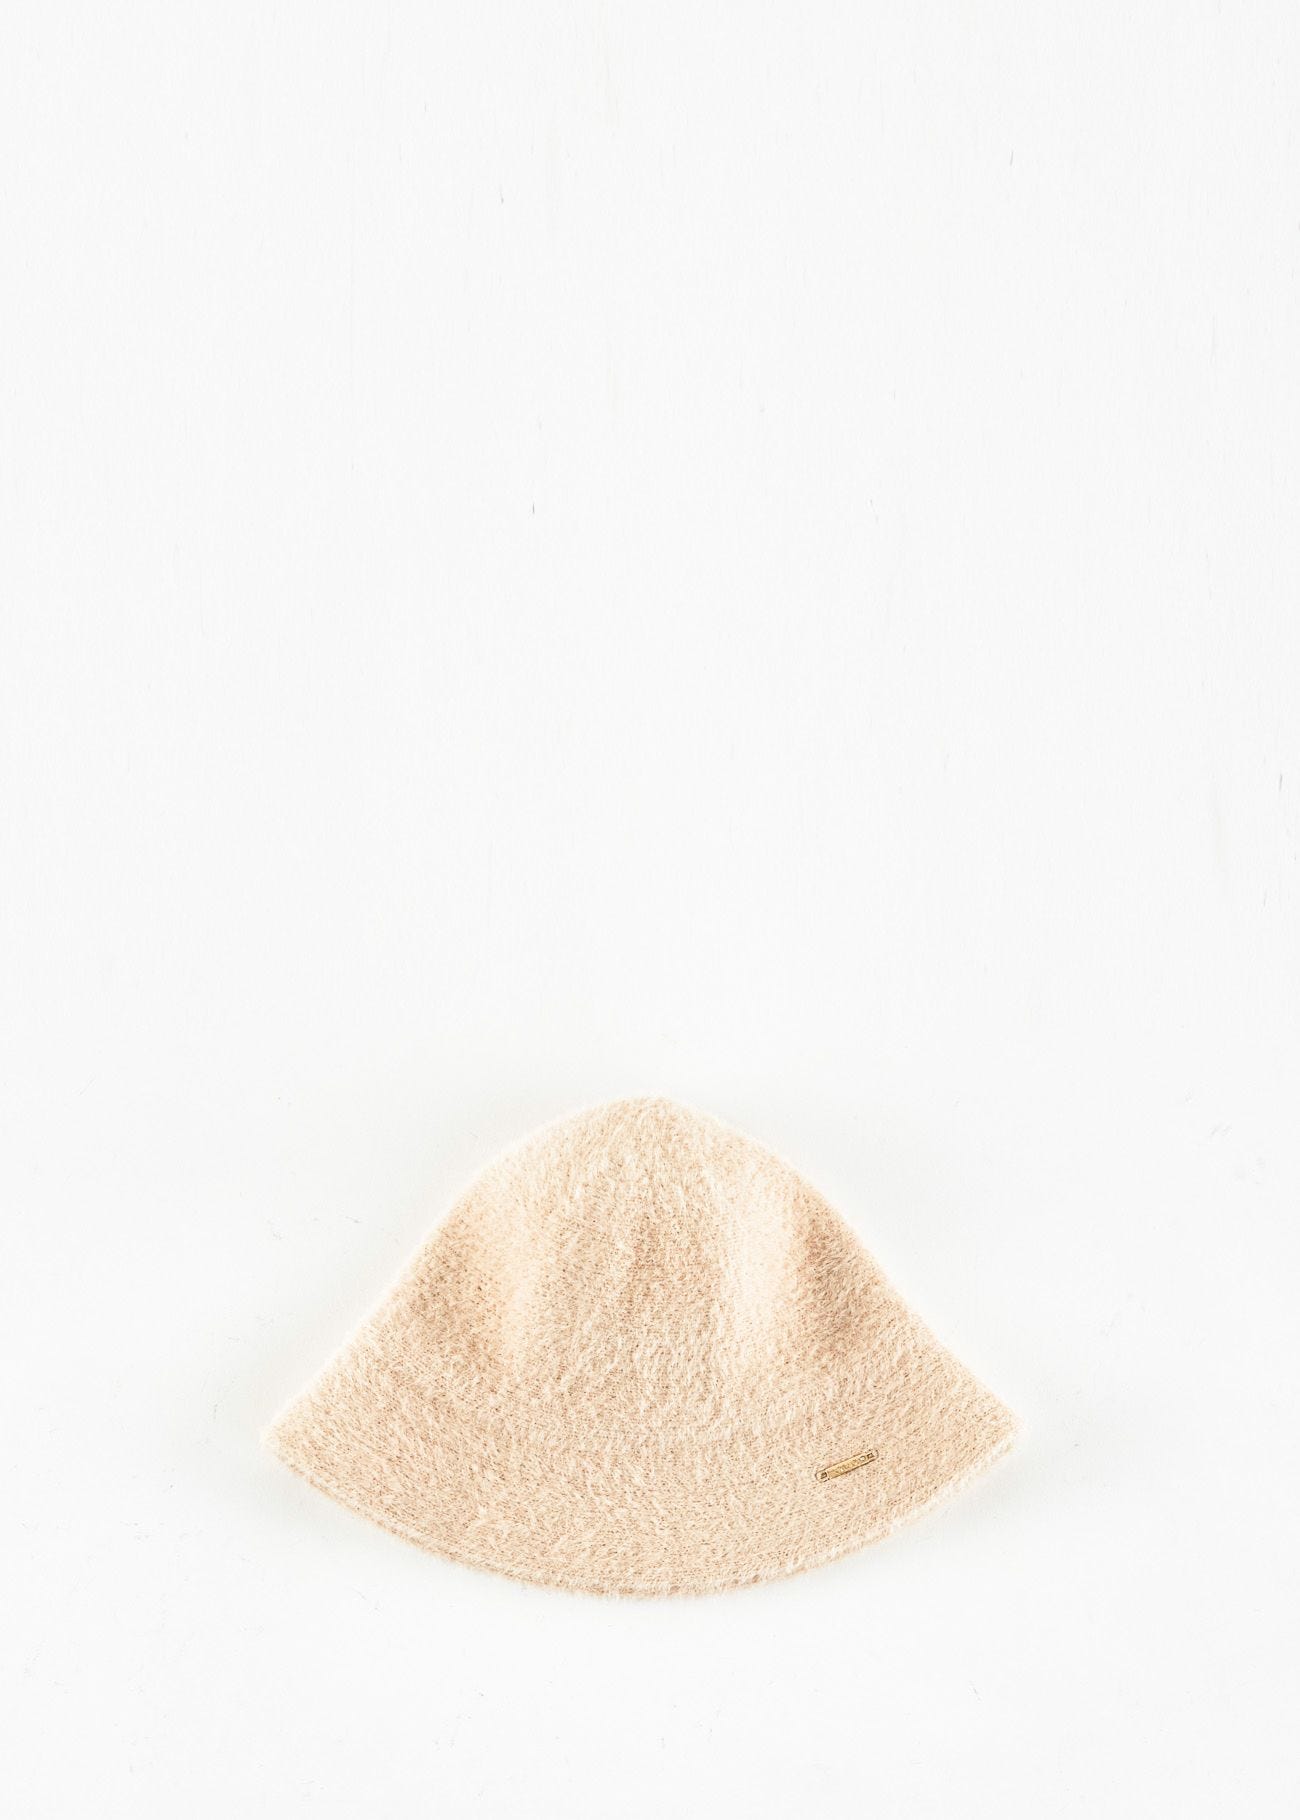 Soft fabric hat